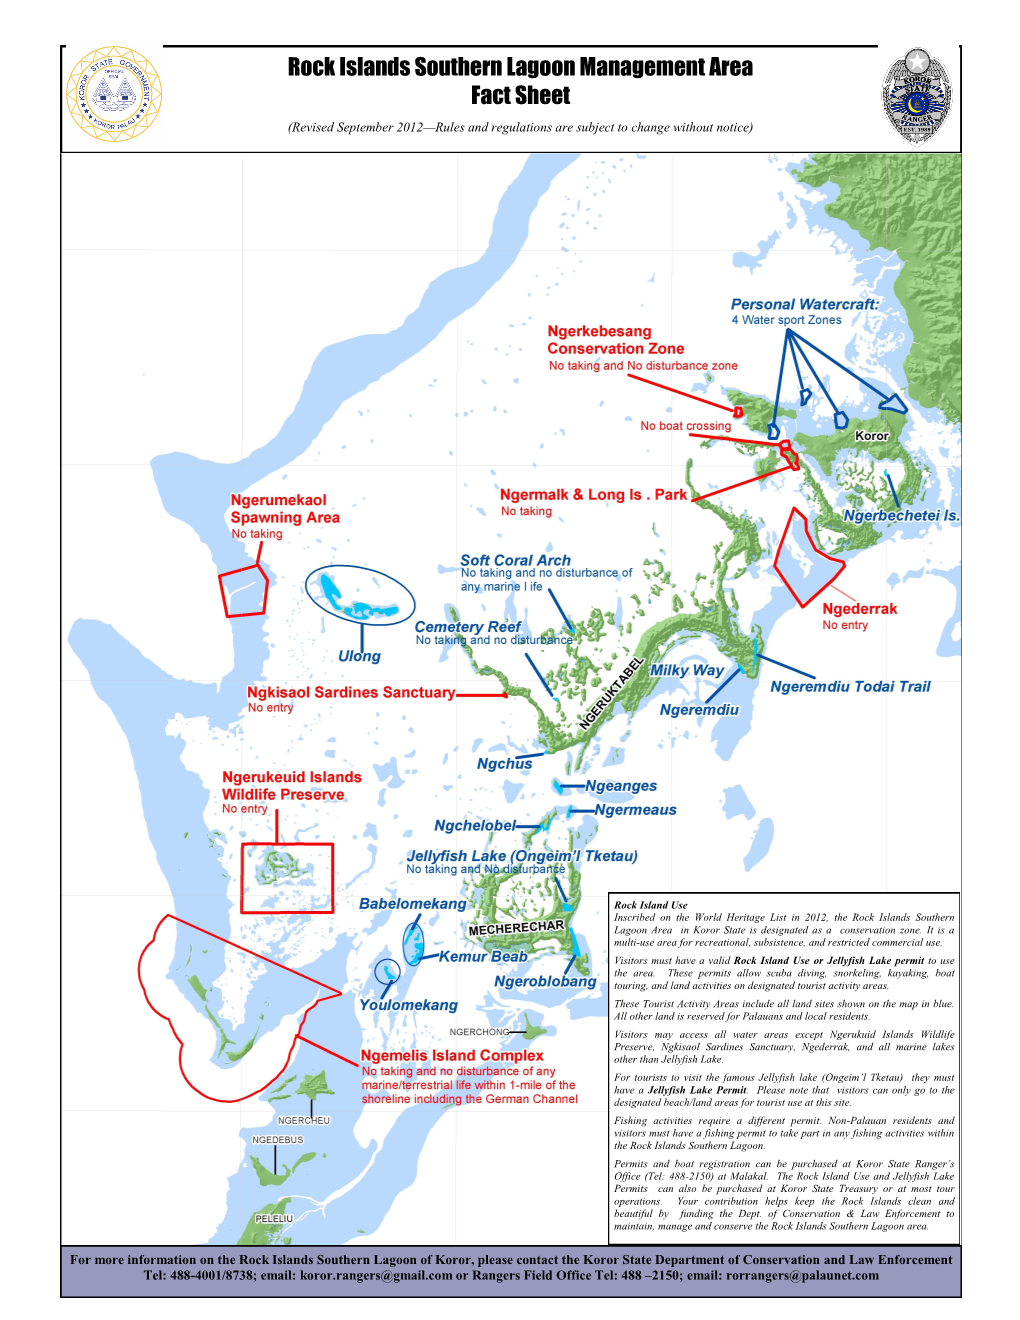 Rock Islands Southern Lagoon Management Area Fact Sheet